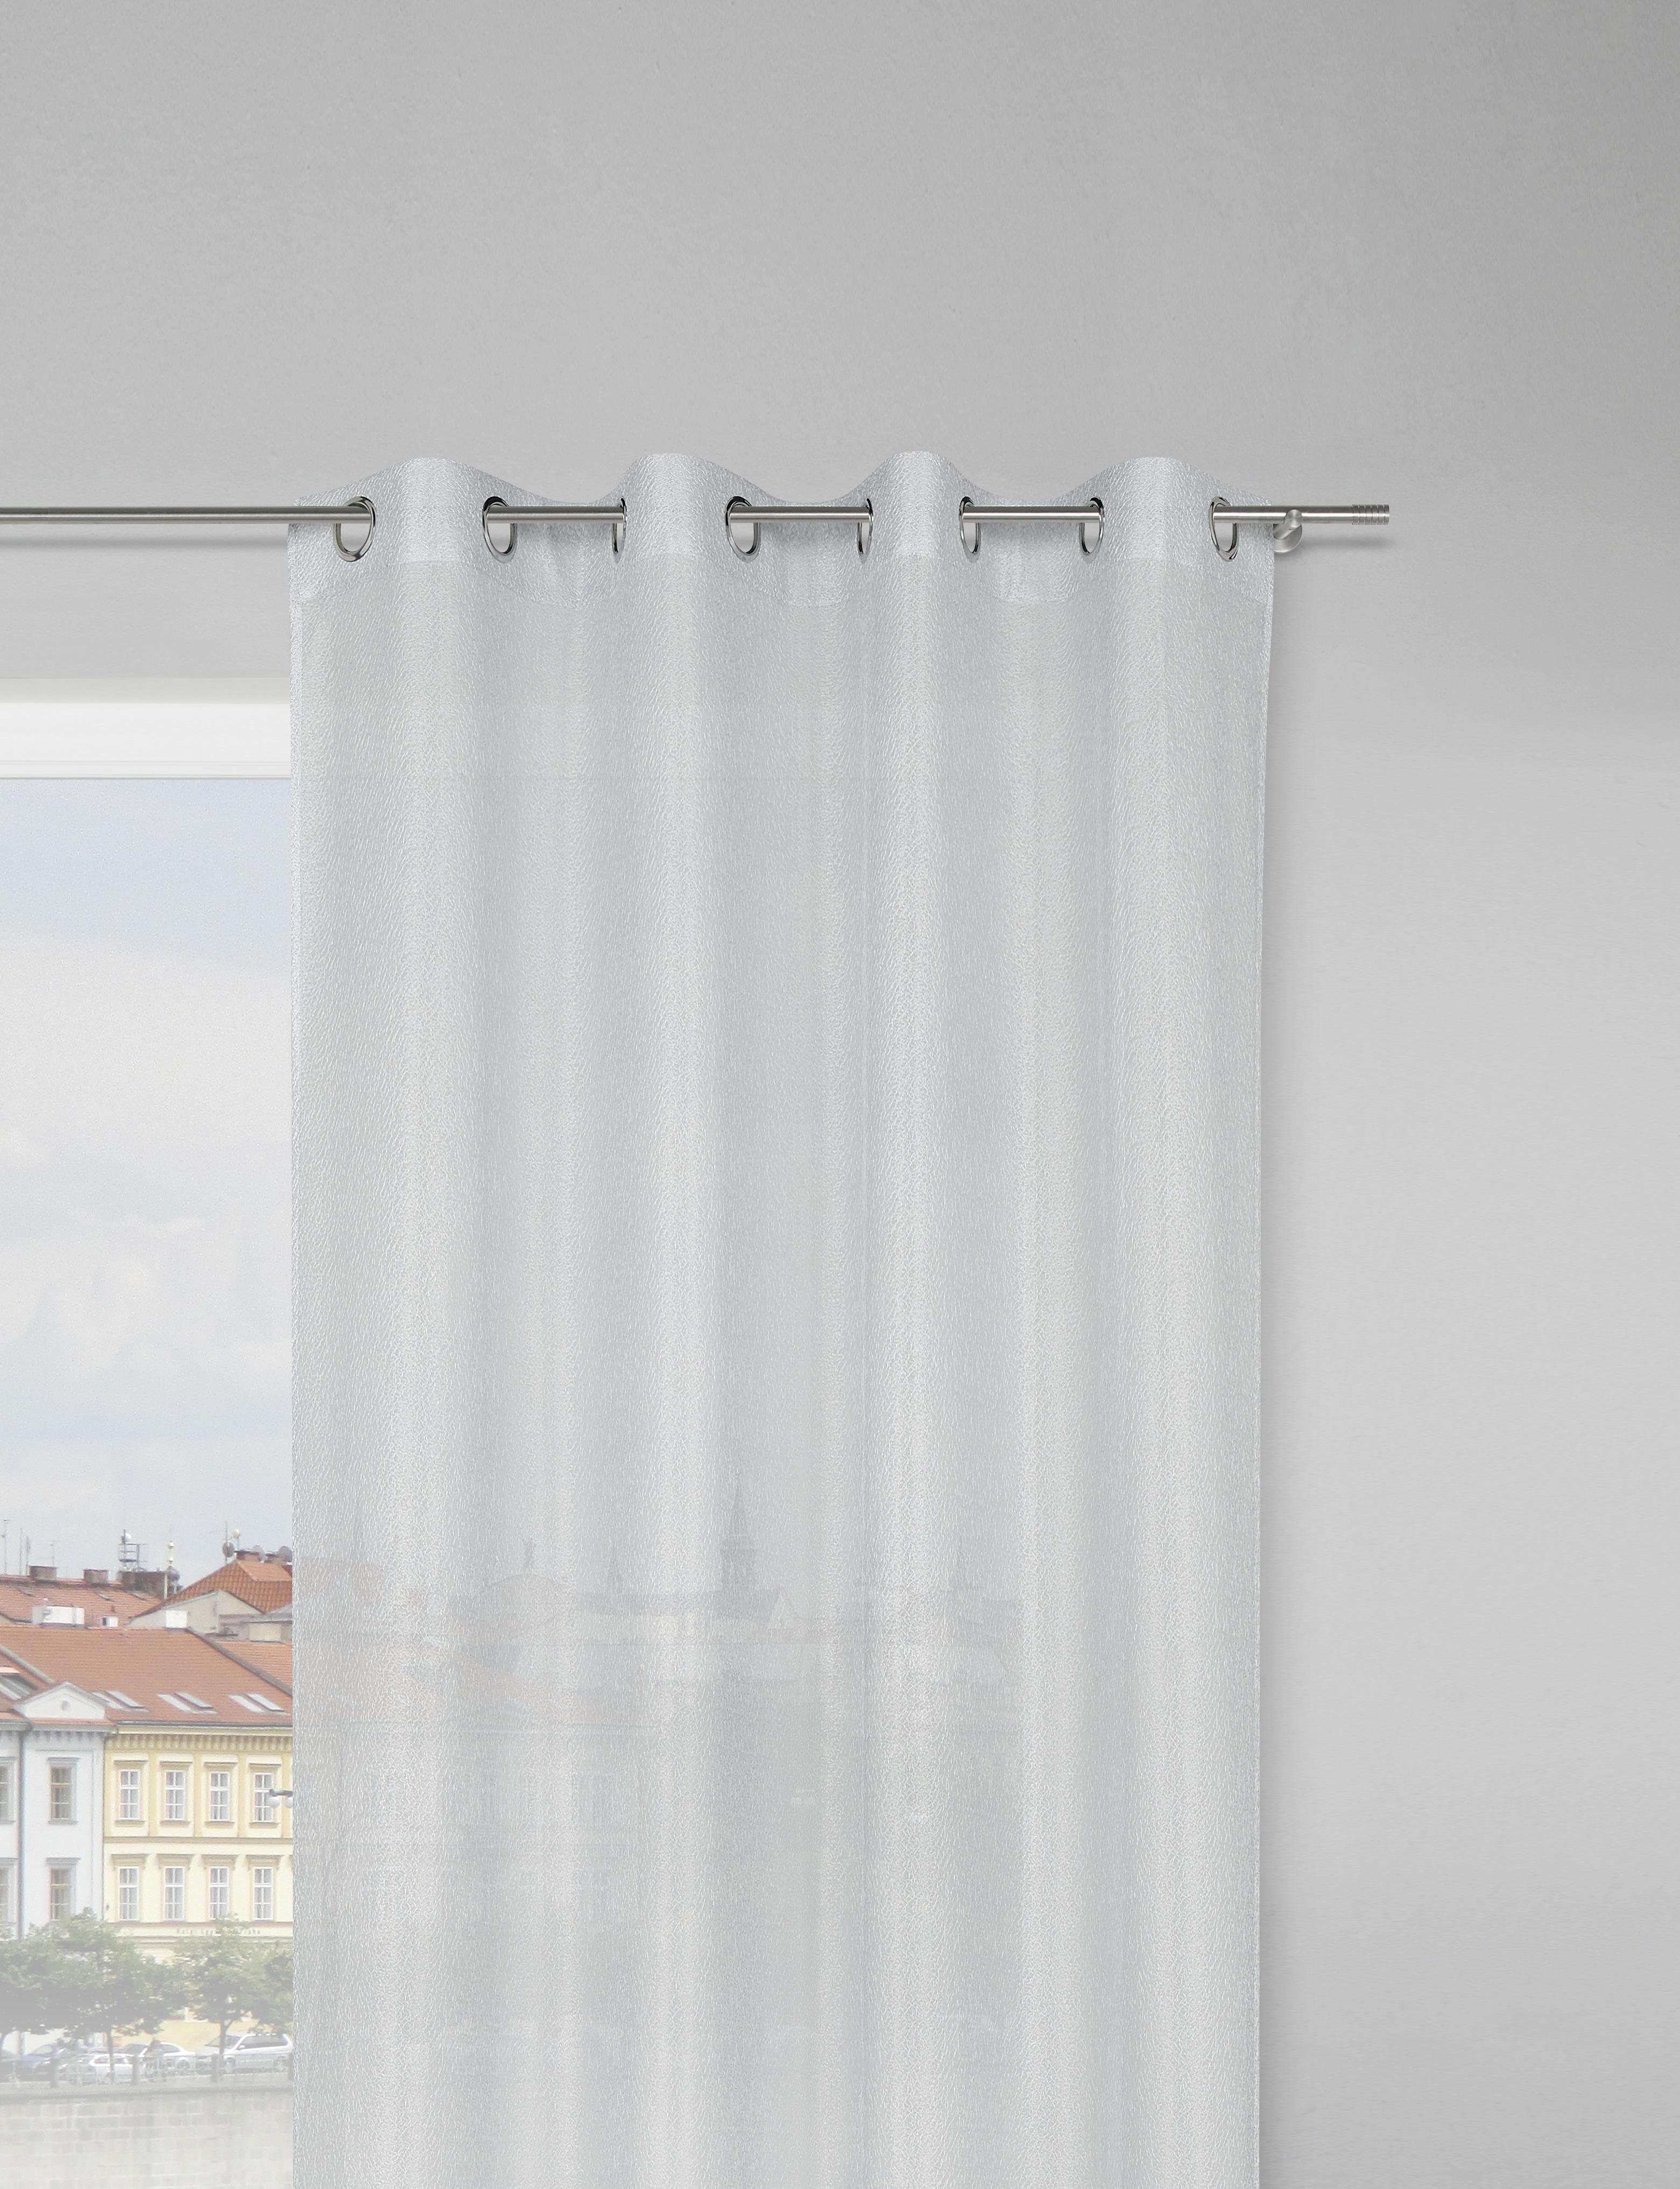 Zavjesa S Ringovima Iceland - srebrne boje, tekstil (140/245cm) - Modern Living